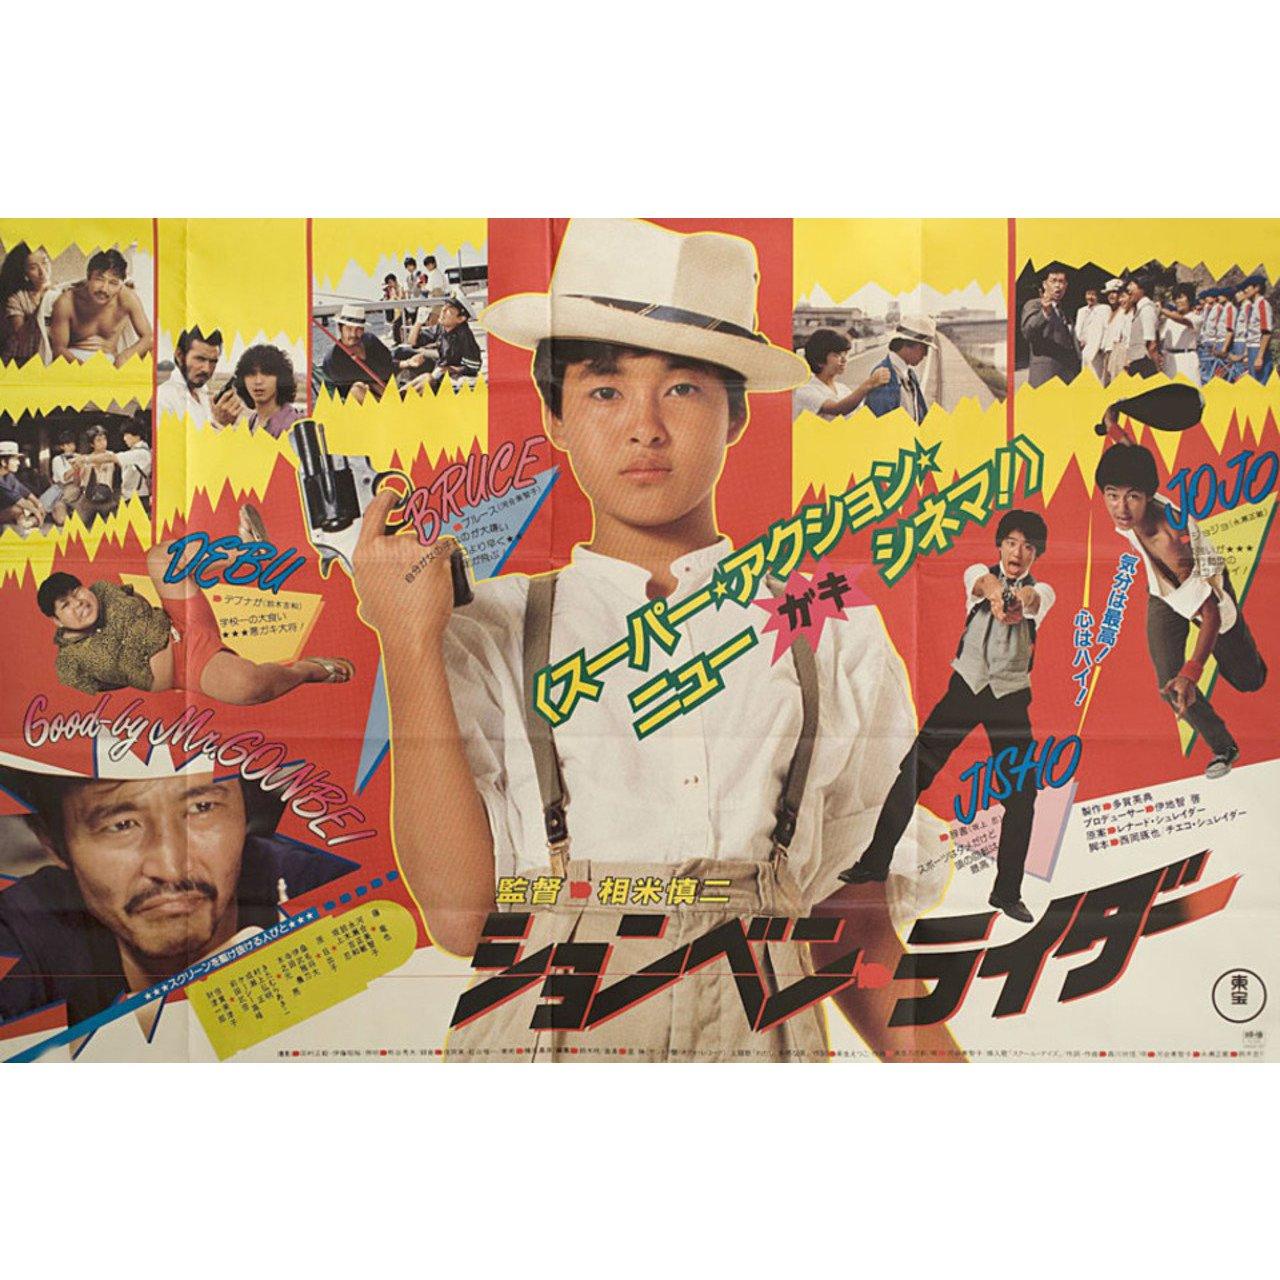 Original 1983 Japanese poster for the film P. P. Rider (Shonben raida) directed by Shinji Somai with Tatsuya Fuji / Michiko Kawai / Masatoshi Nagase / Shinobu Sakagami. Fine condition, folded. Many original posters were issued folded or were